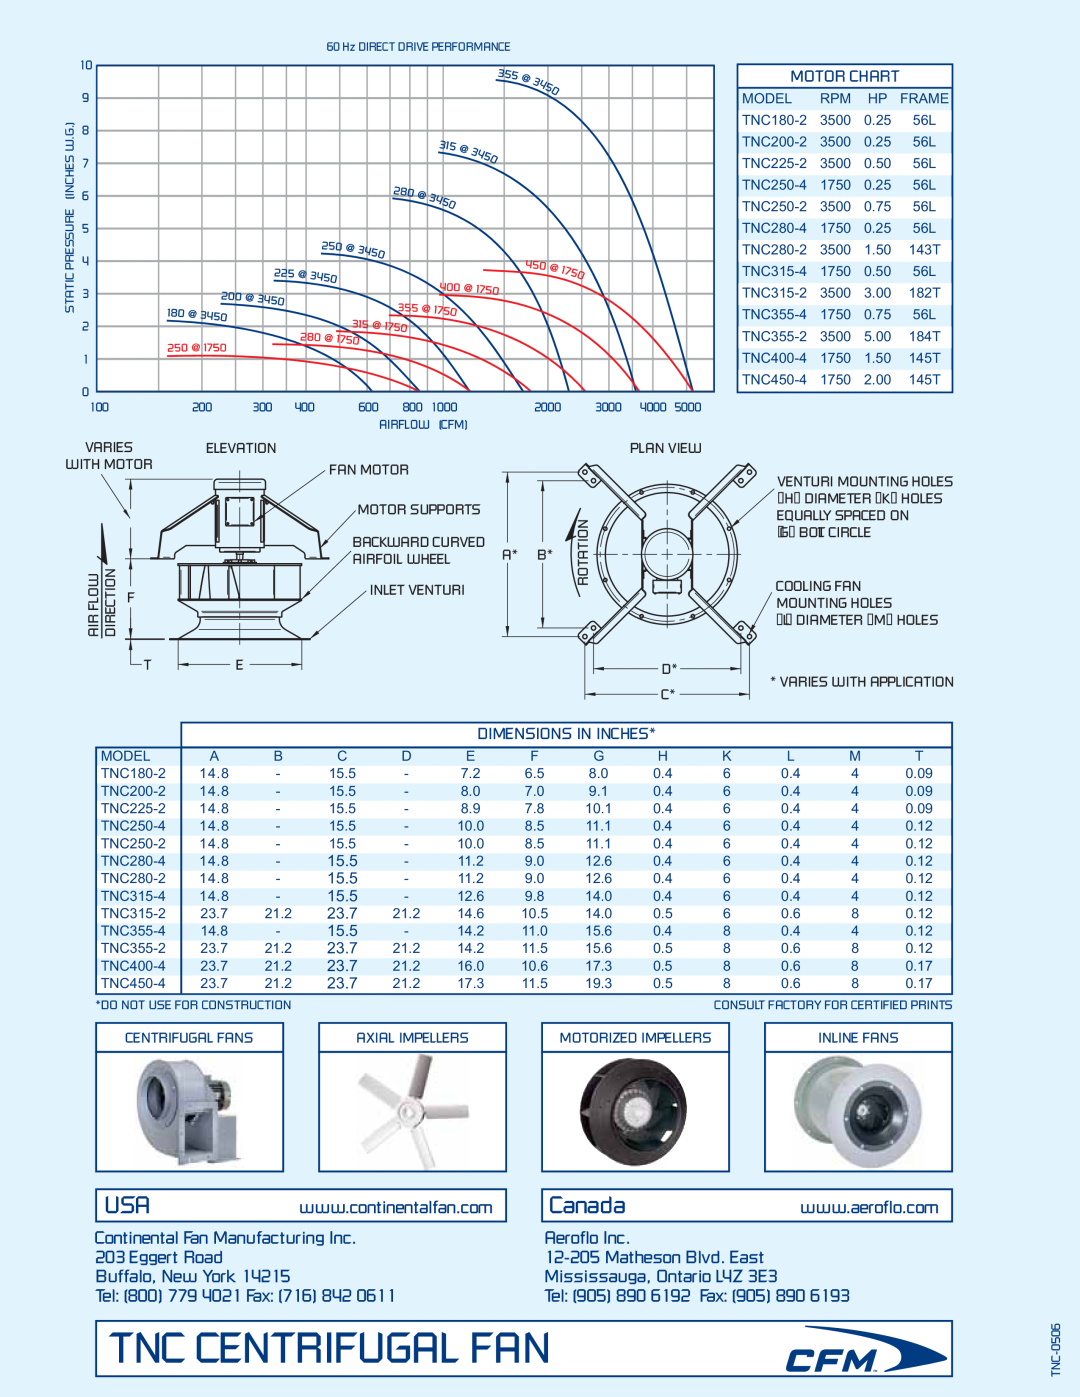 CFM TNC280-4 manual Tnc Centrifugal Fan, Continental Fan Manufacturing Inc 203 Eggert Road Buffalo, New York, Motor Chart 